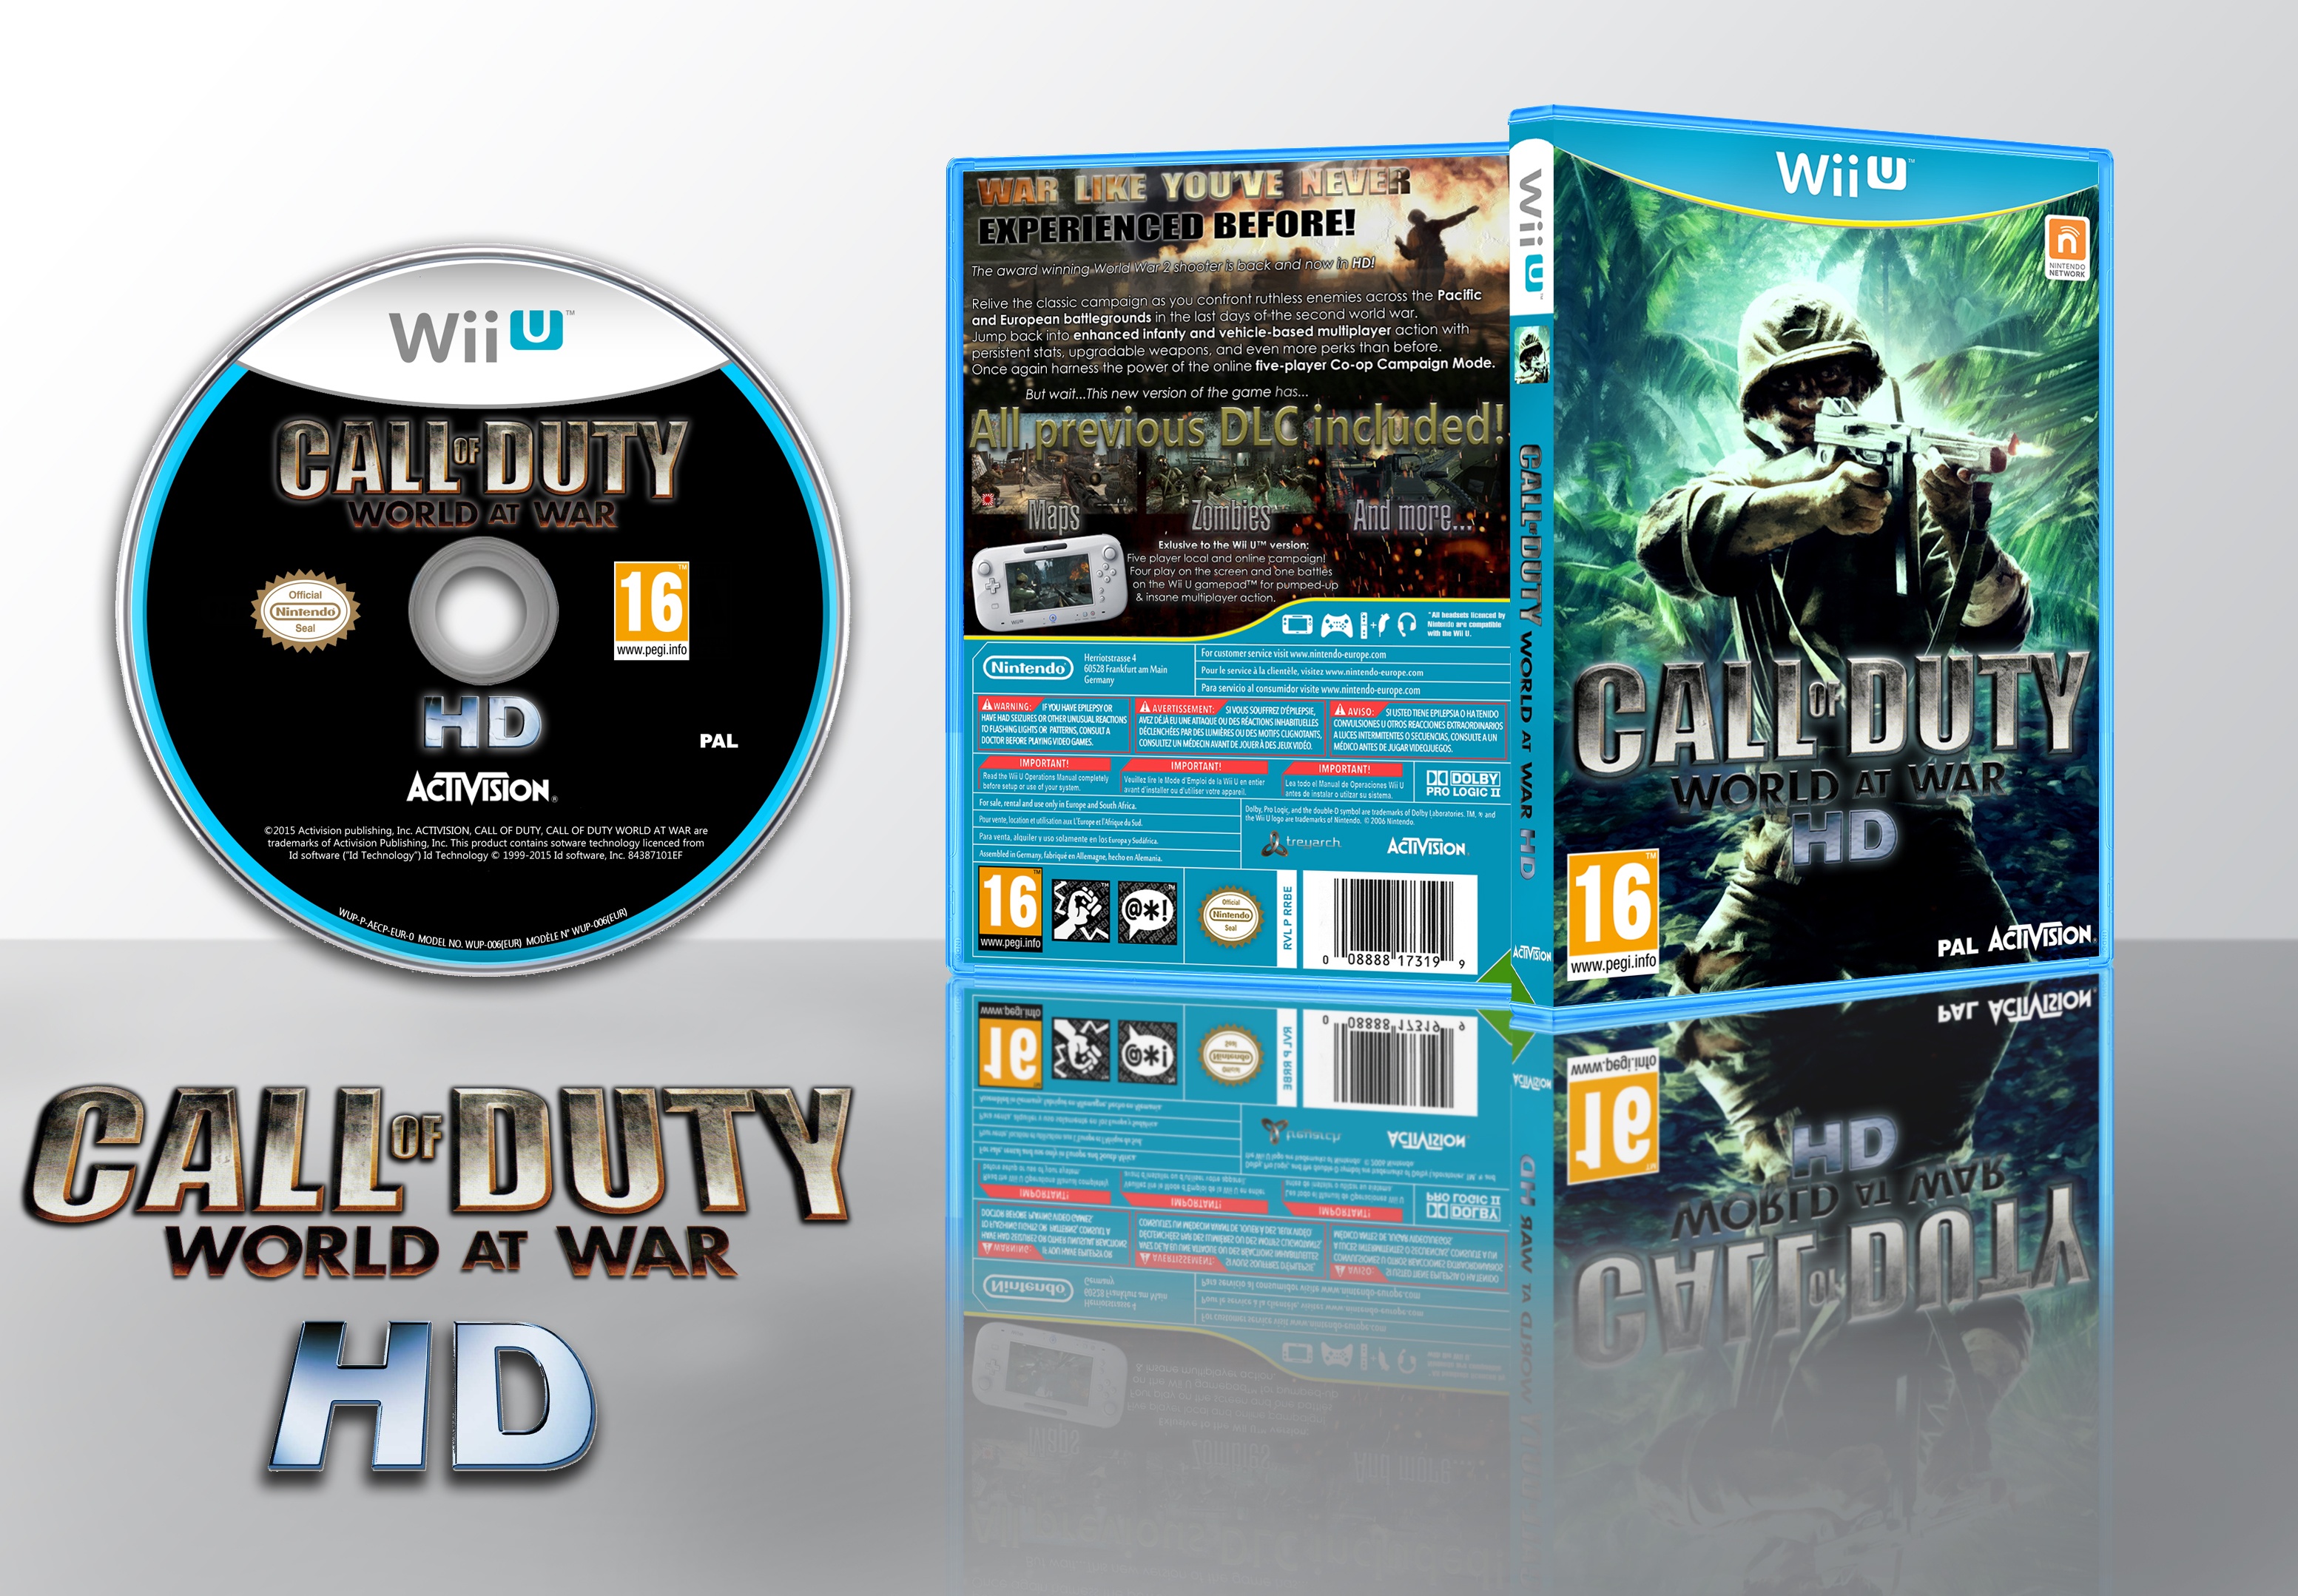 Call Of Duty: World At War HD box cover